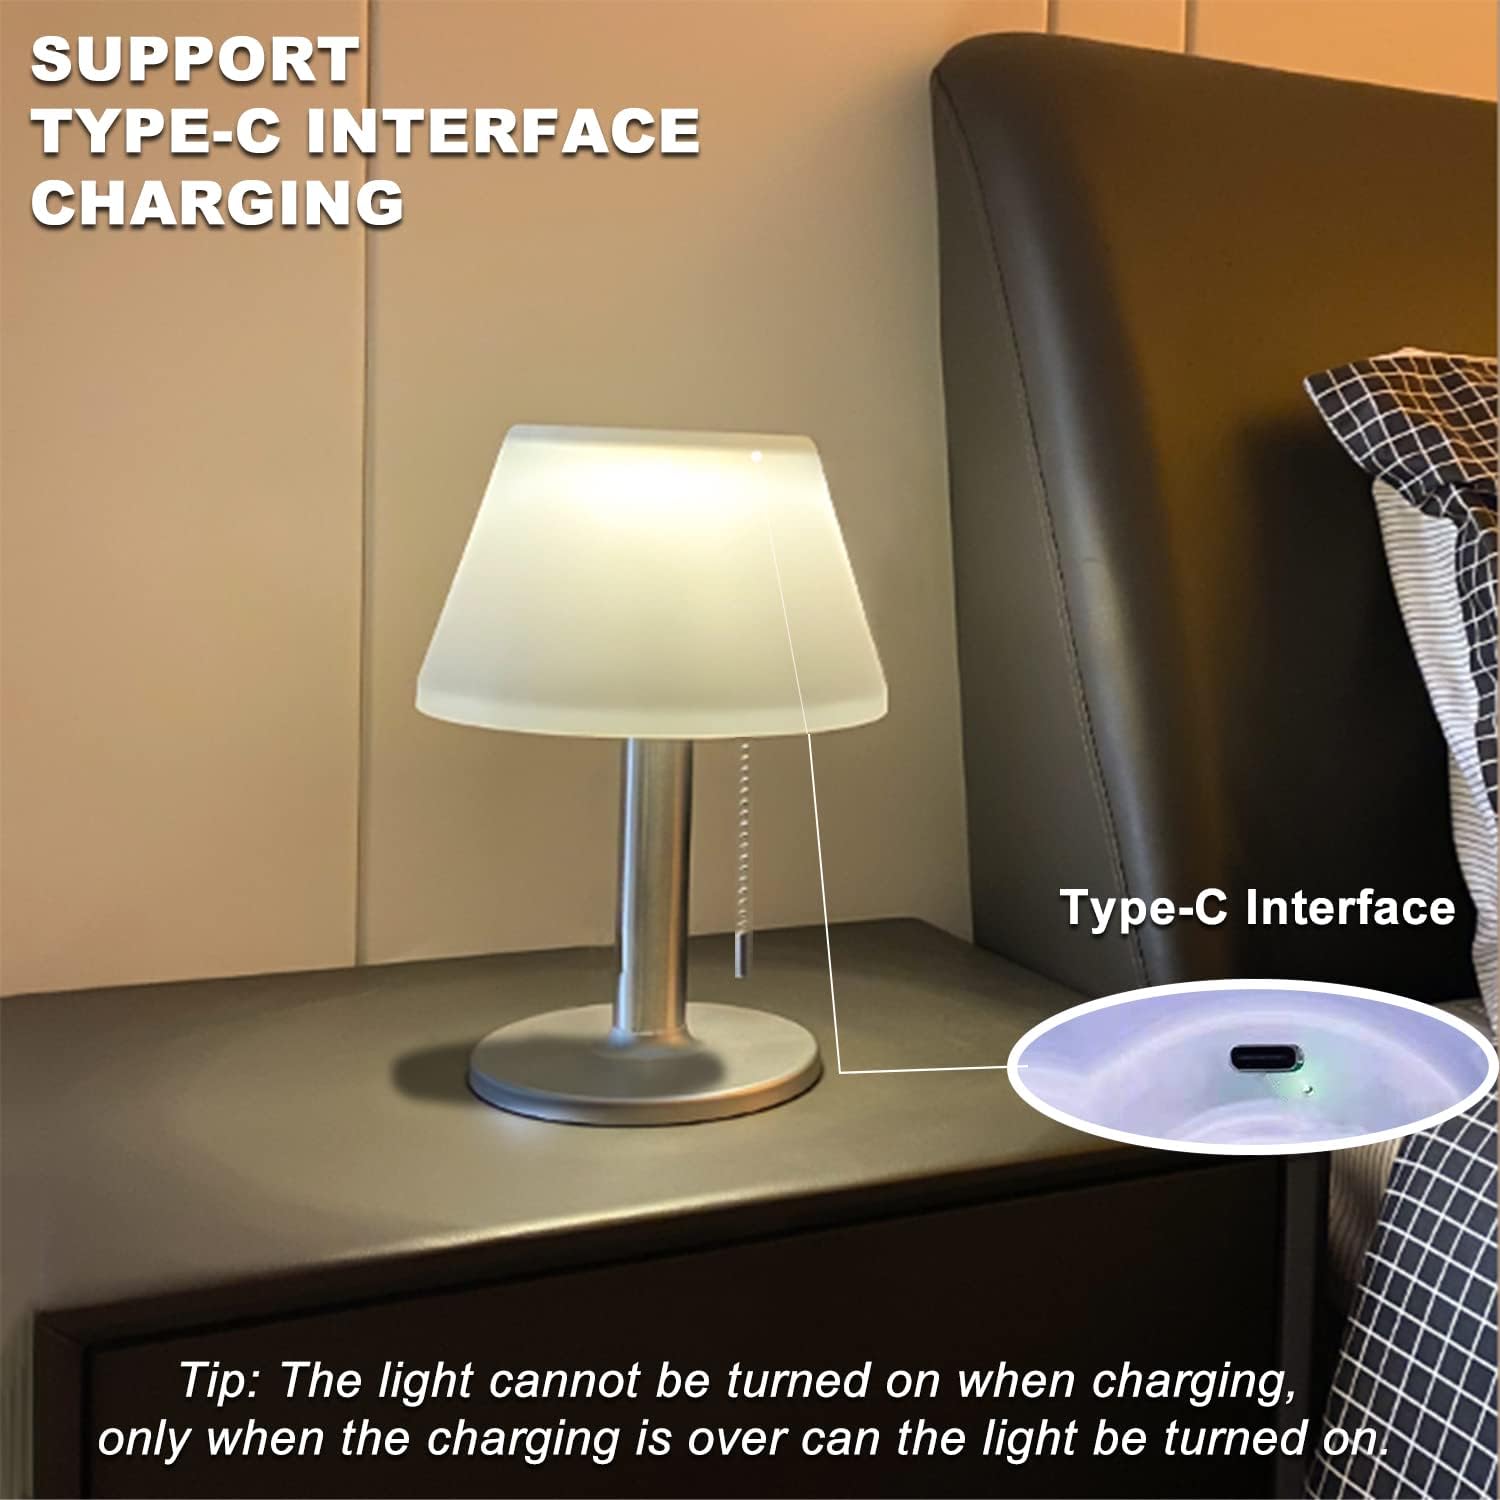 Awanber Solar Table Lamp, Support USB Charging, 3-Level Brightness Solar LED Night Lights with Pull Chain Waterproof Solar Garden Light